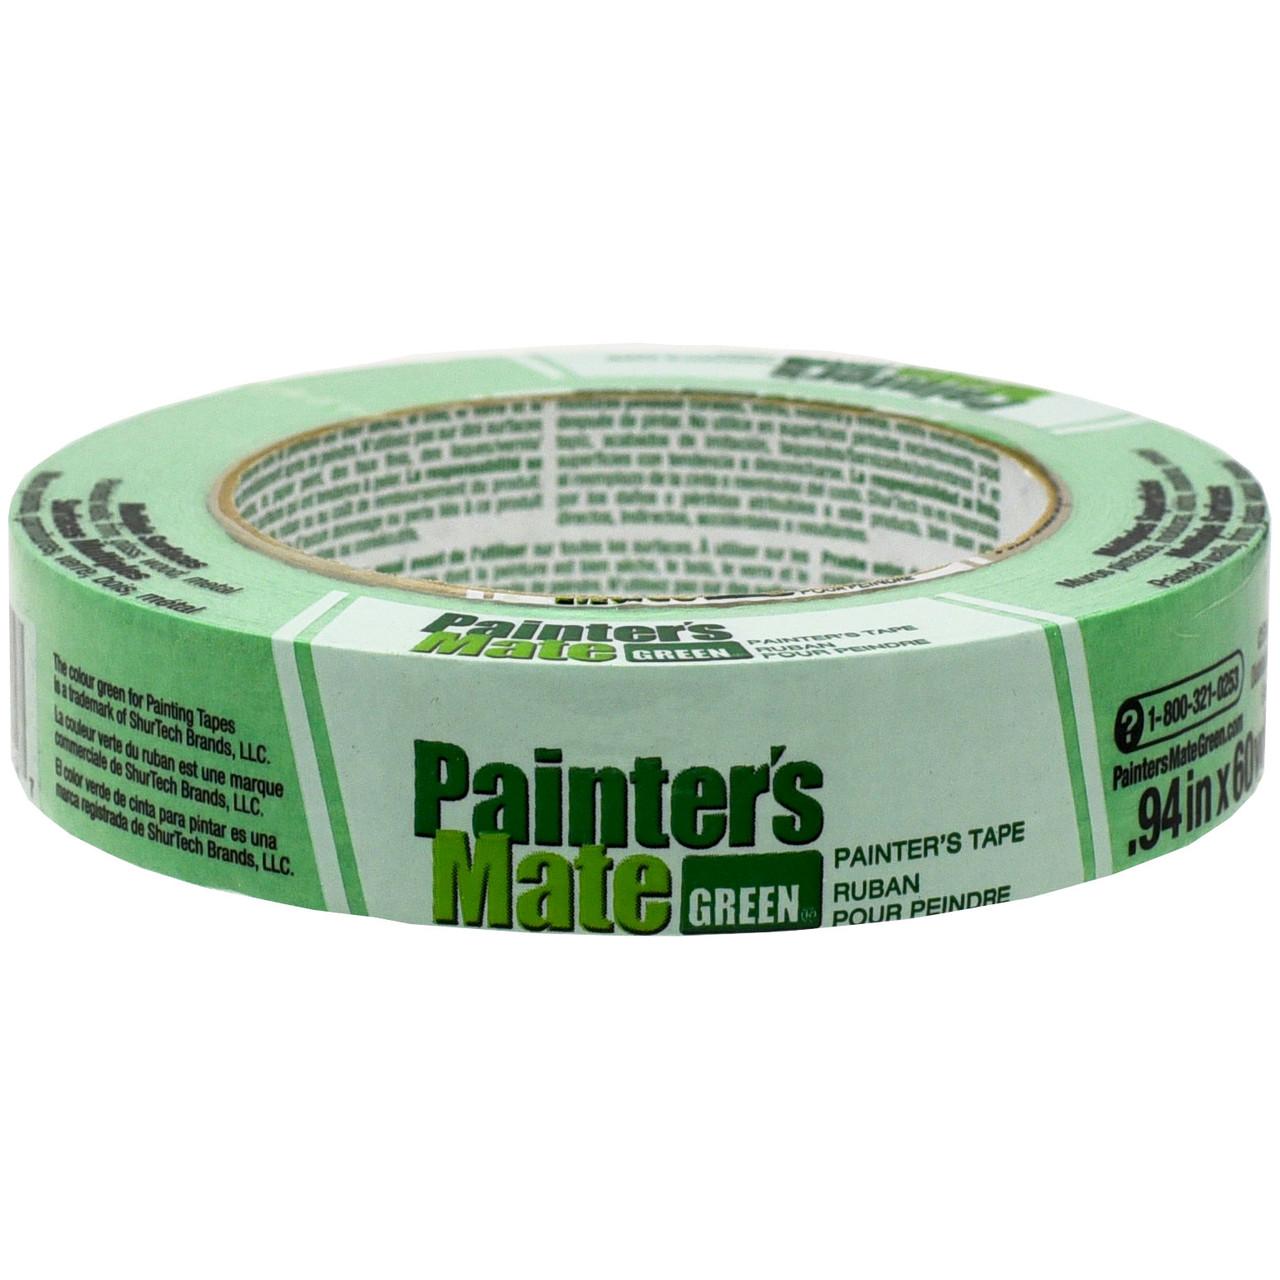 Painters Mate Green Masking Tape